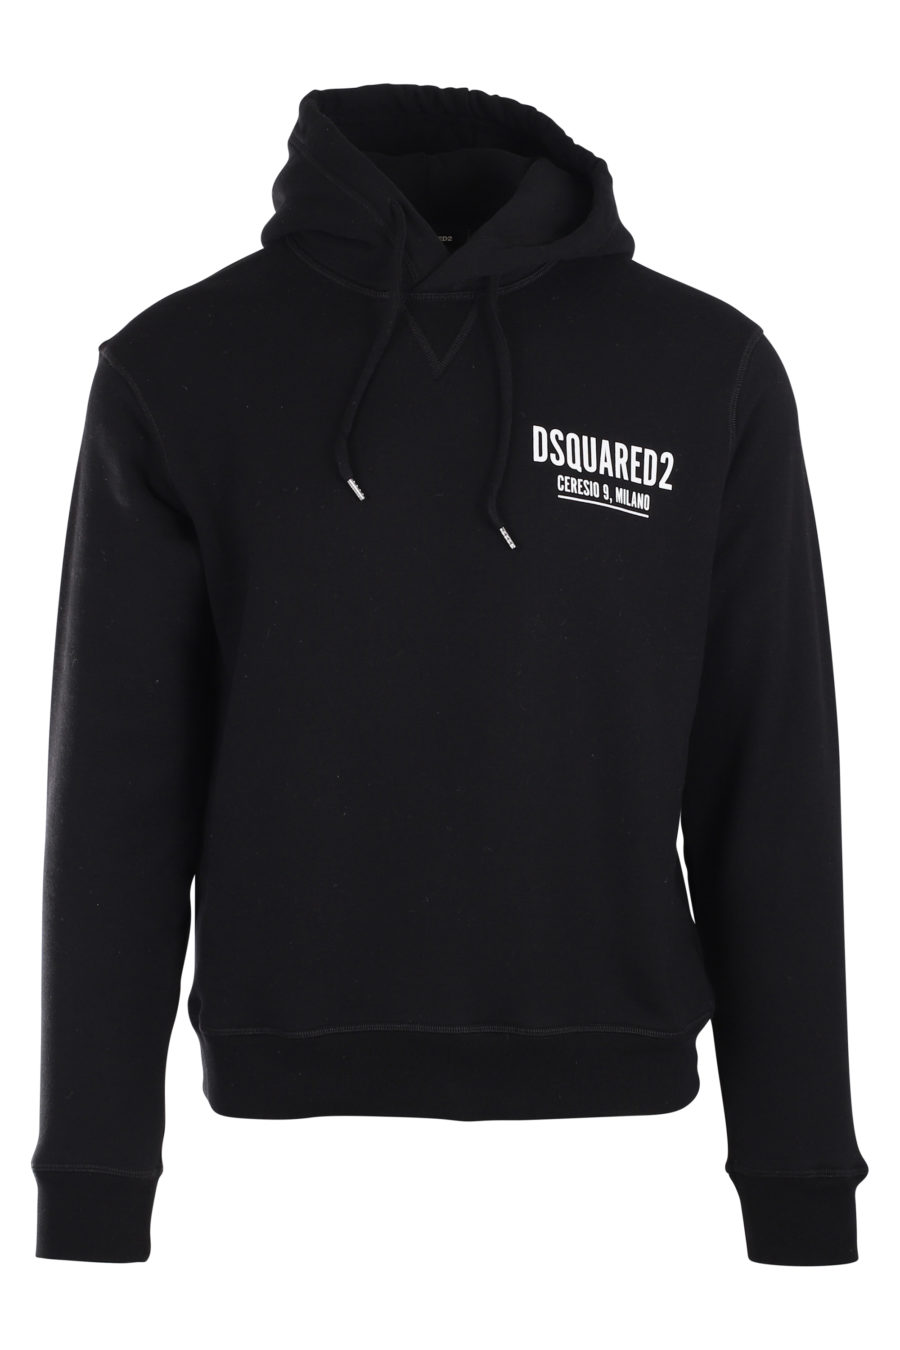 Black sweatshirt with hood and logo ceresio 9 - IMG 9893